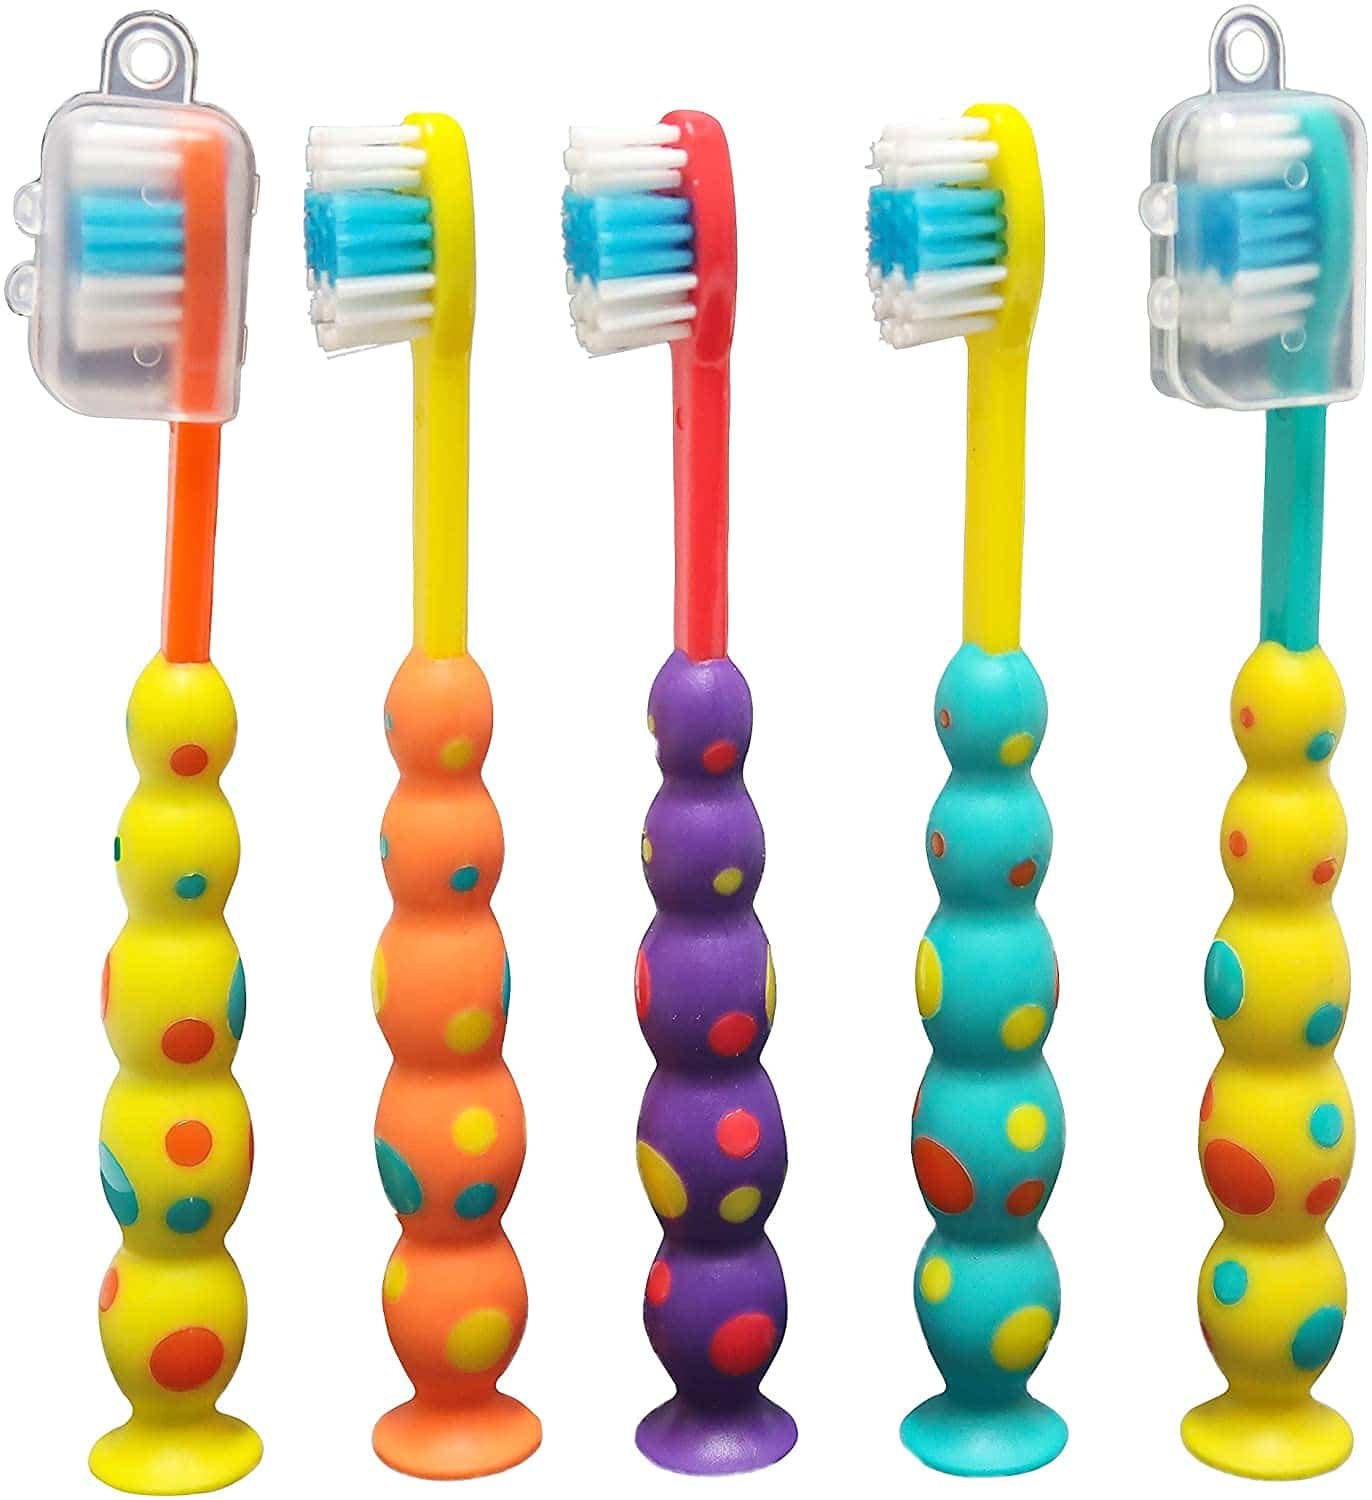 7. Stesa Kids Toothbrush - 5 Pack: